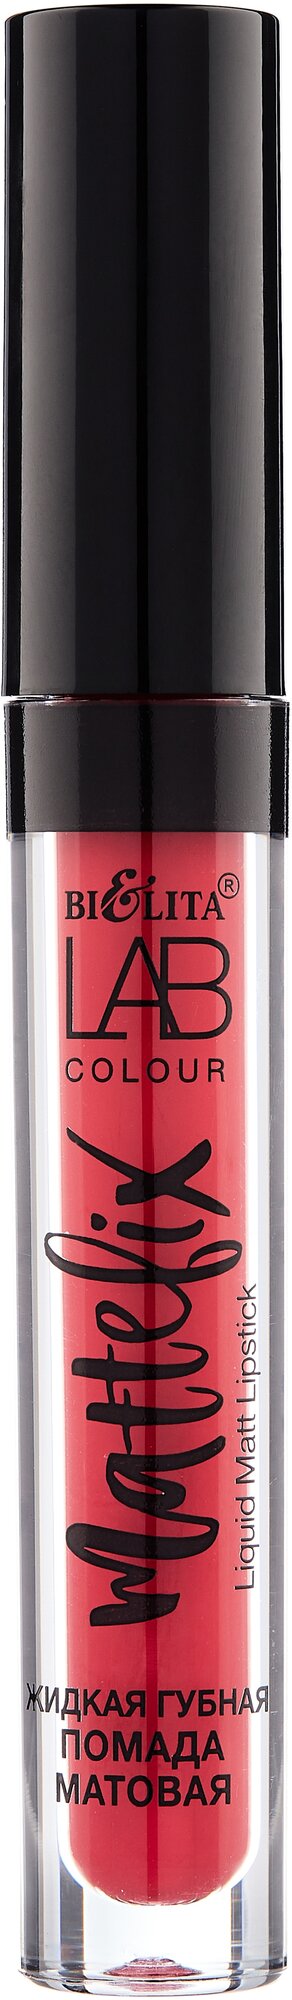 Bielita LAB colour жидкая губная помада MATTEFIX, оттенок 307 red queen